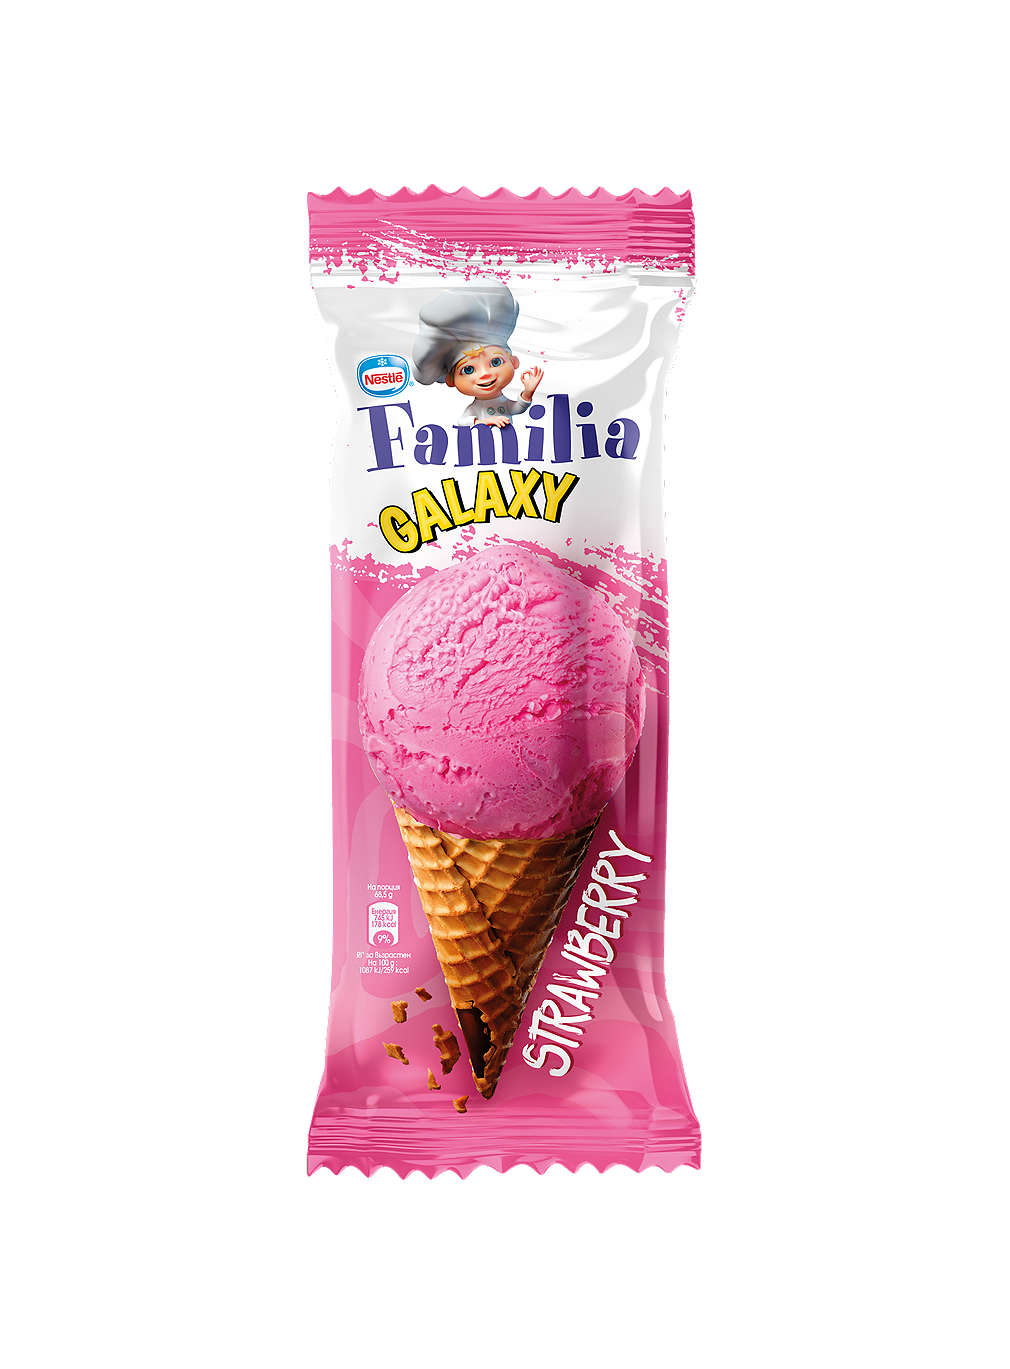 Изображение за продукта Galaxy Сладолед различни вкусове